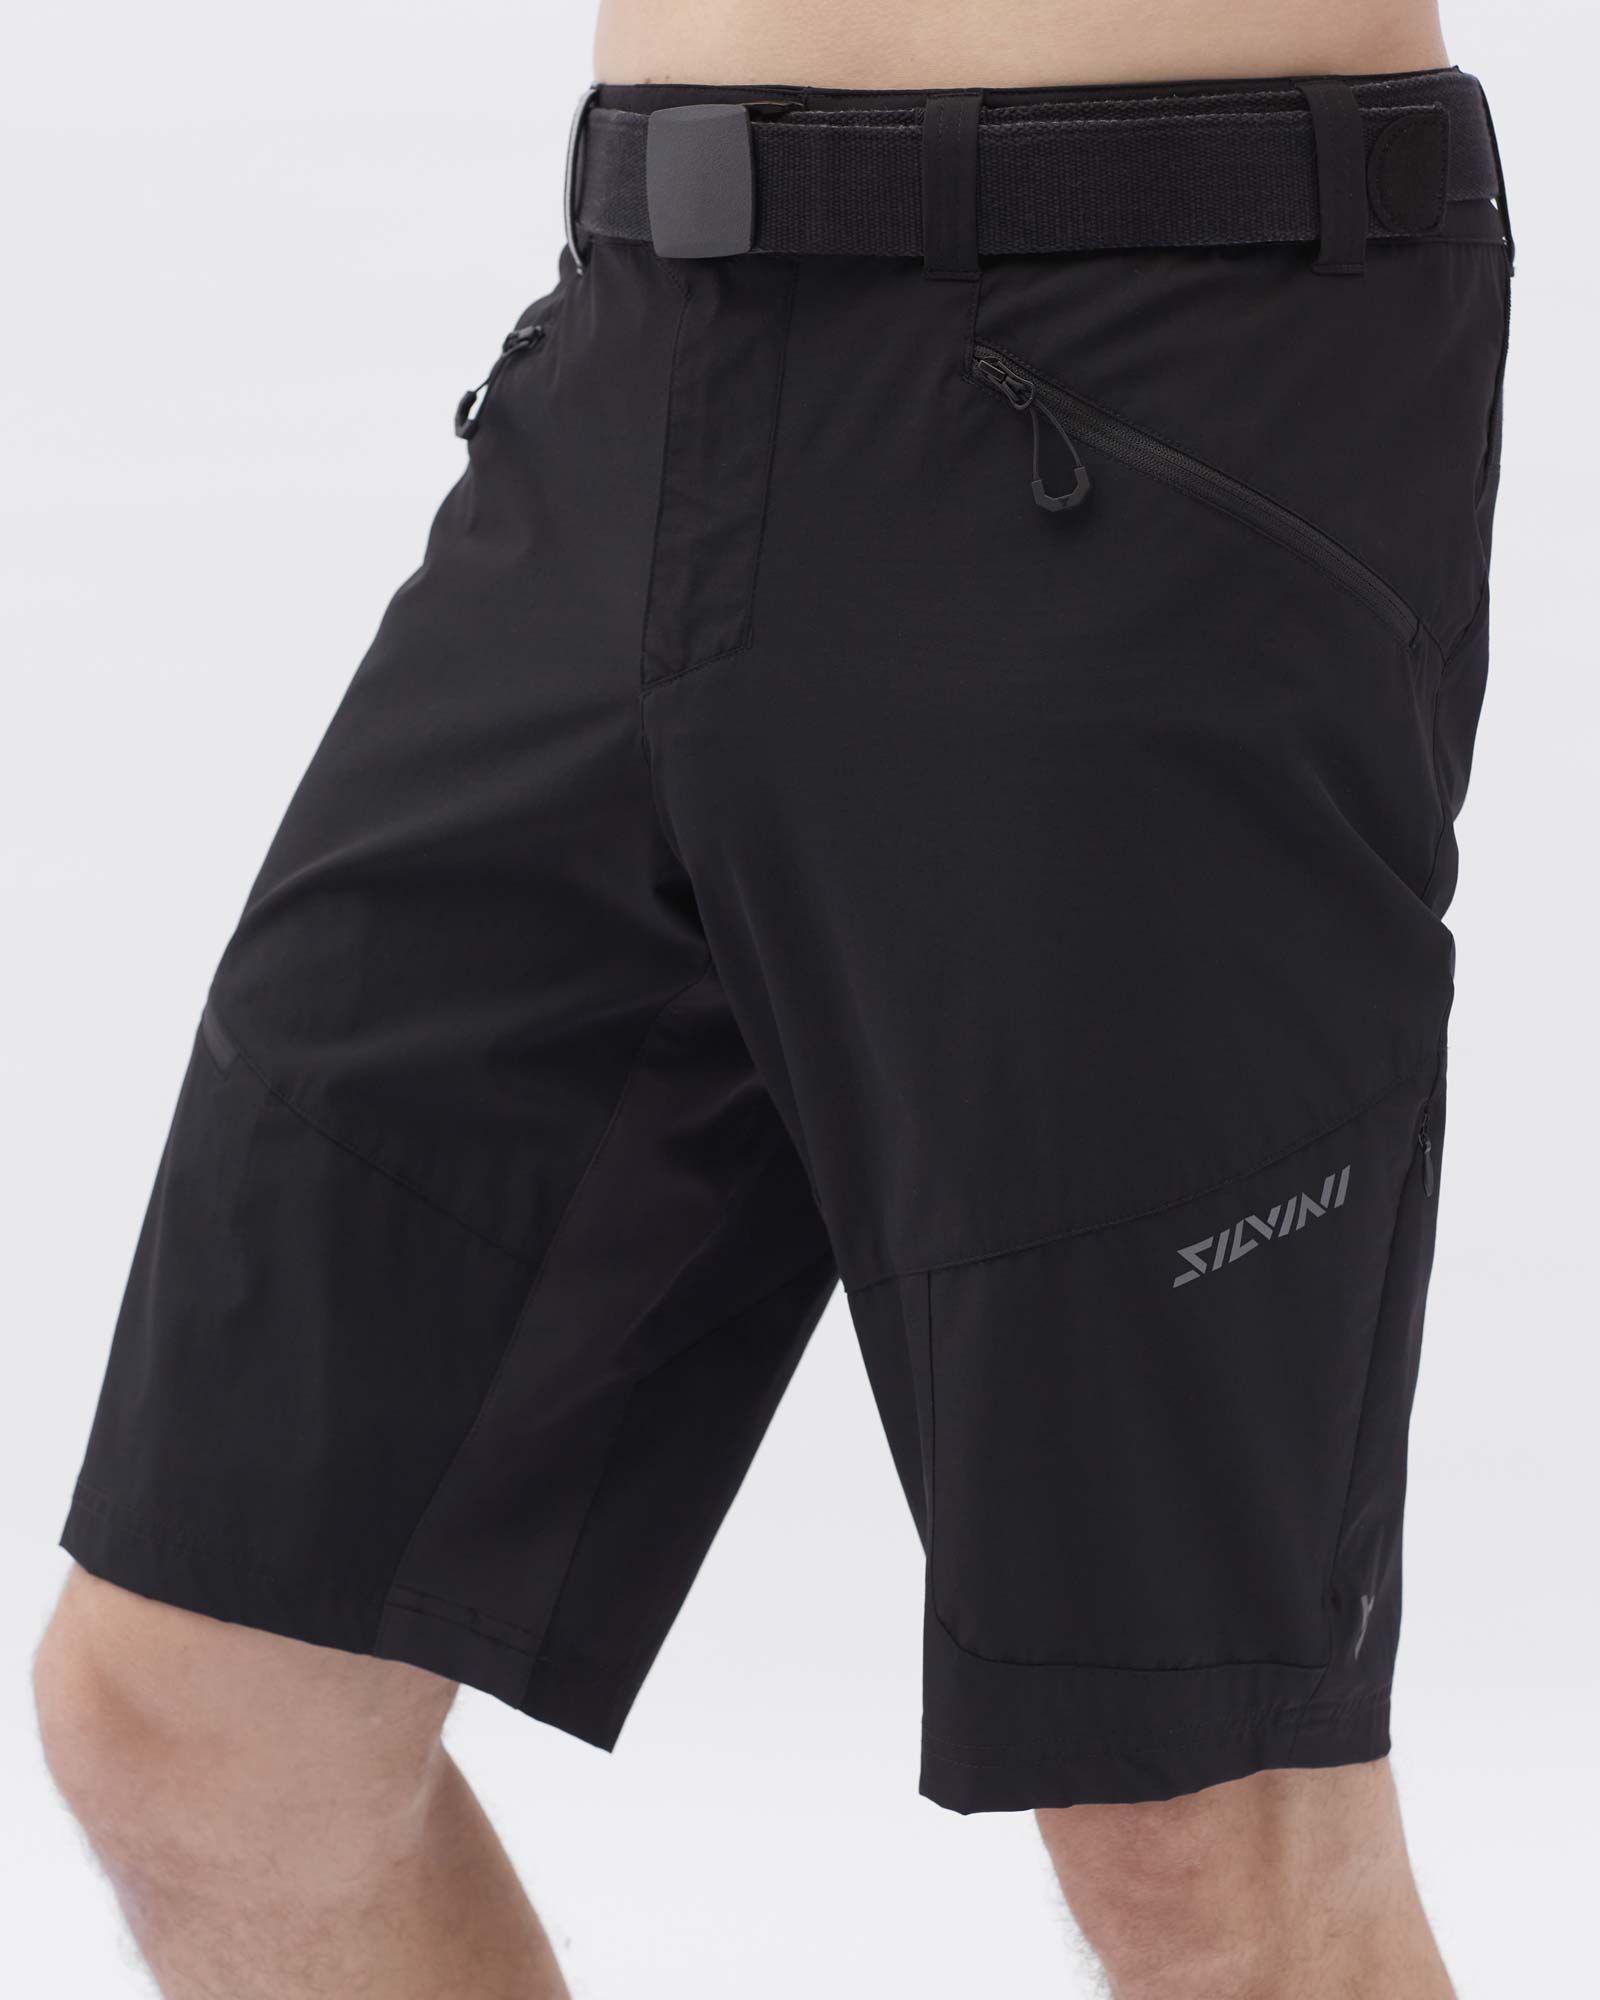 Men’s MTB shorts